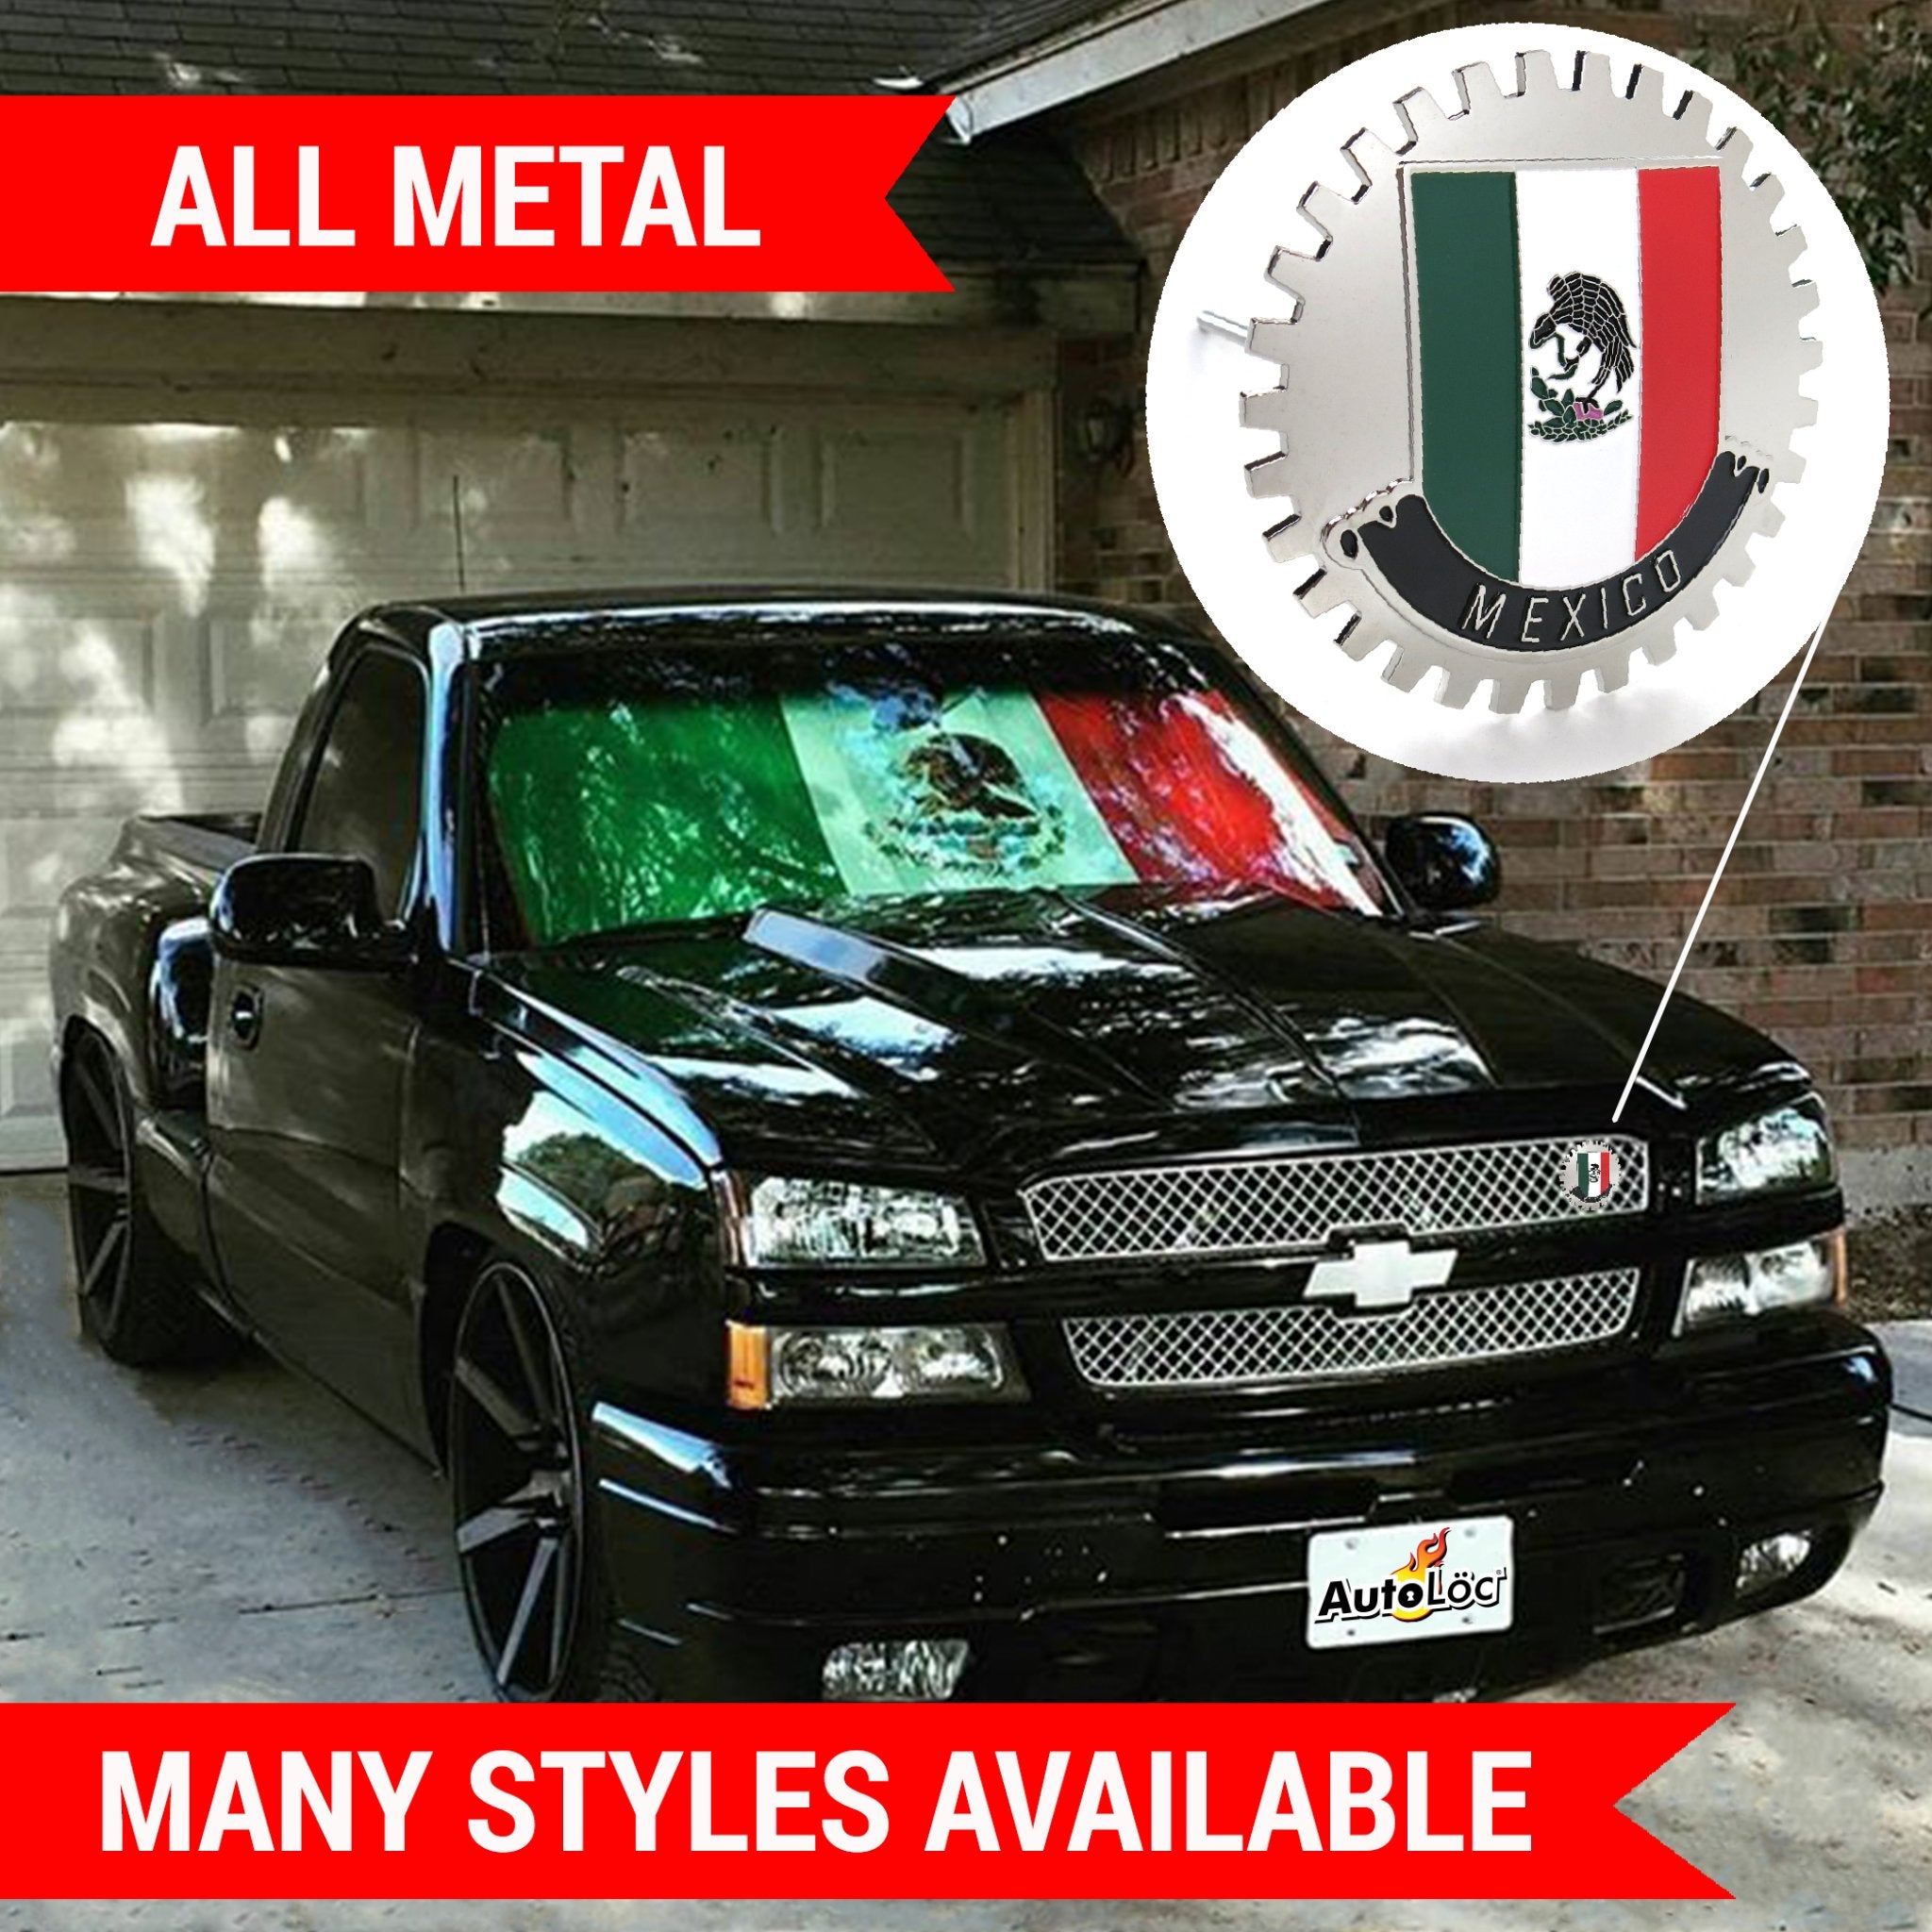 Insignia de parrilla cromada Jalisco México emblema bandera bandera roja medallón coche camión SUV